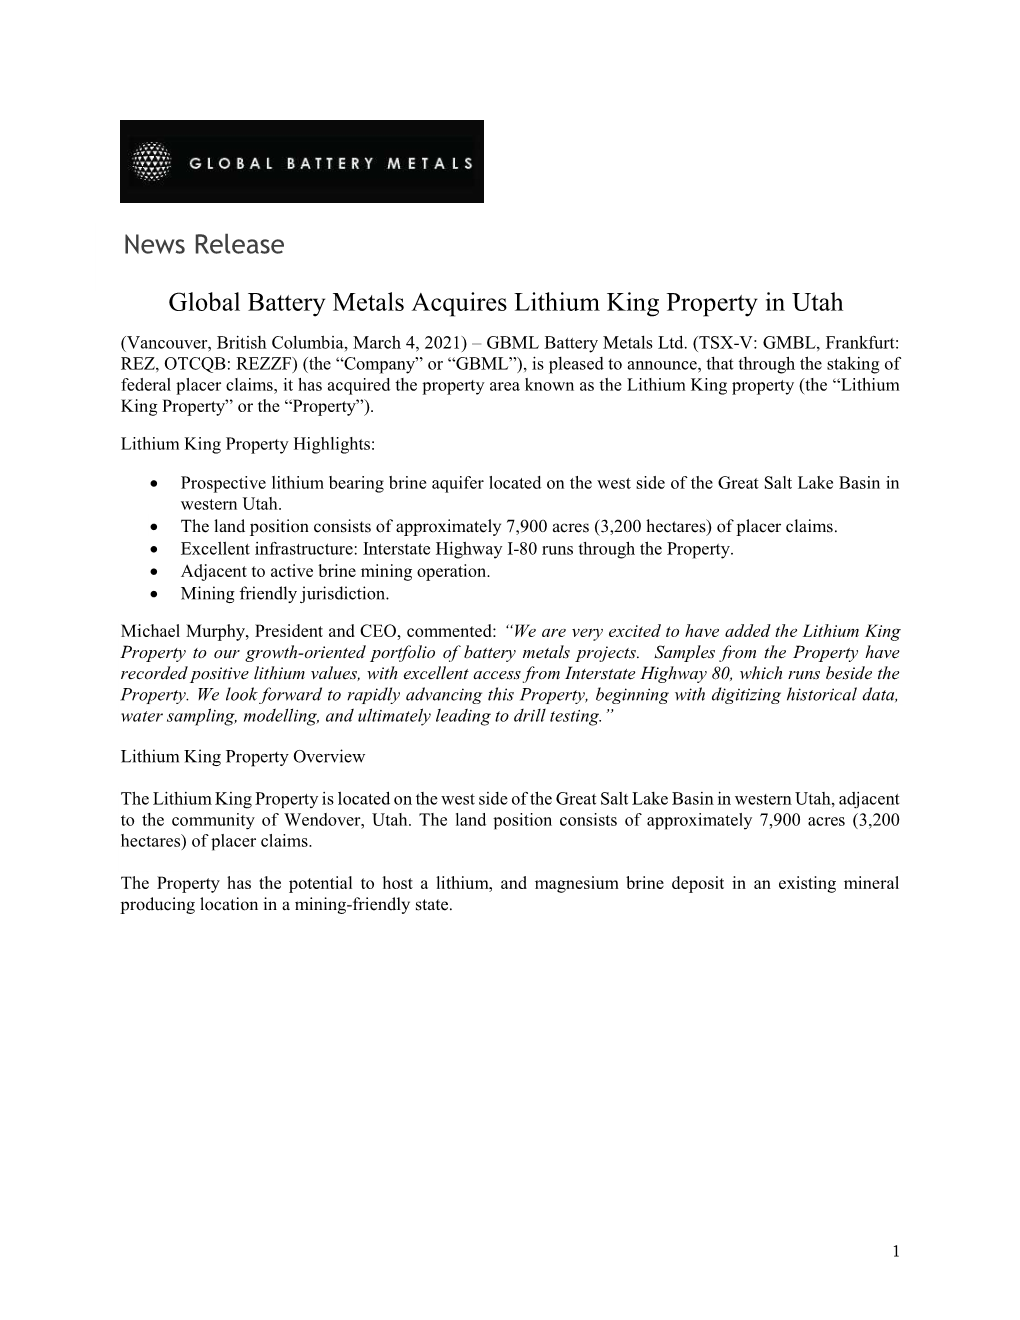 Global Battery Metals Acquires Lithium King Property in Utah News